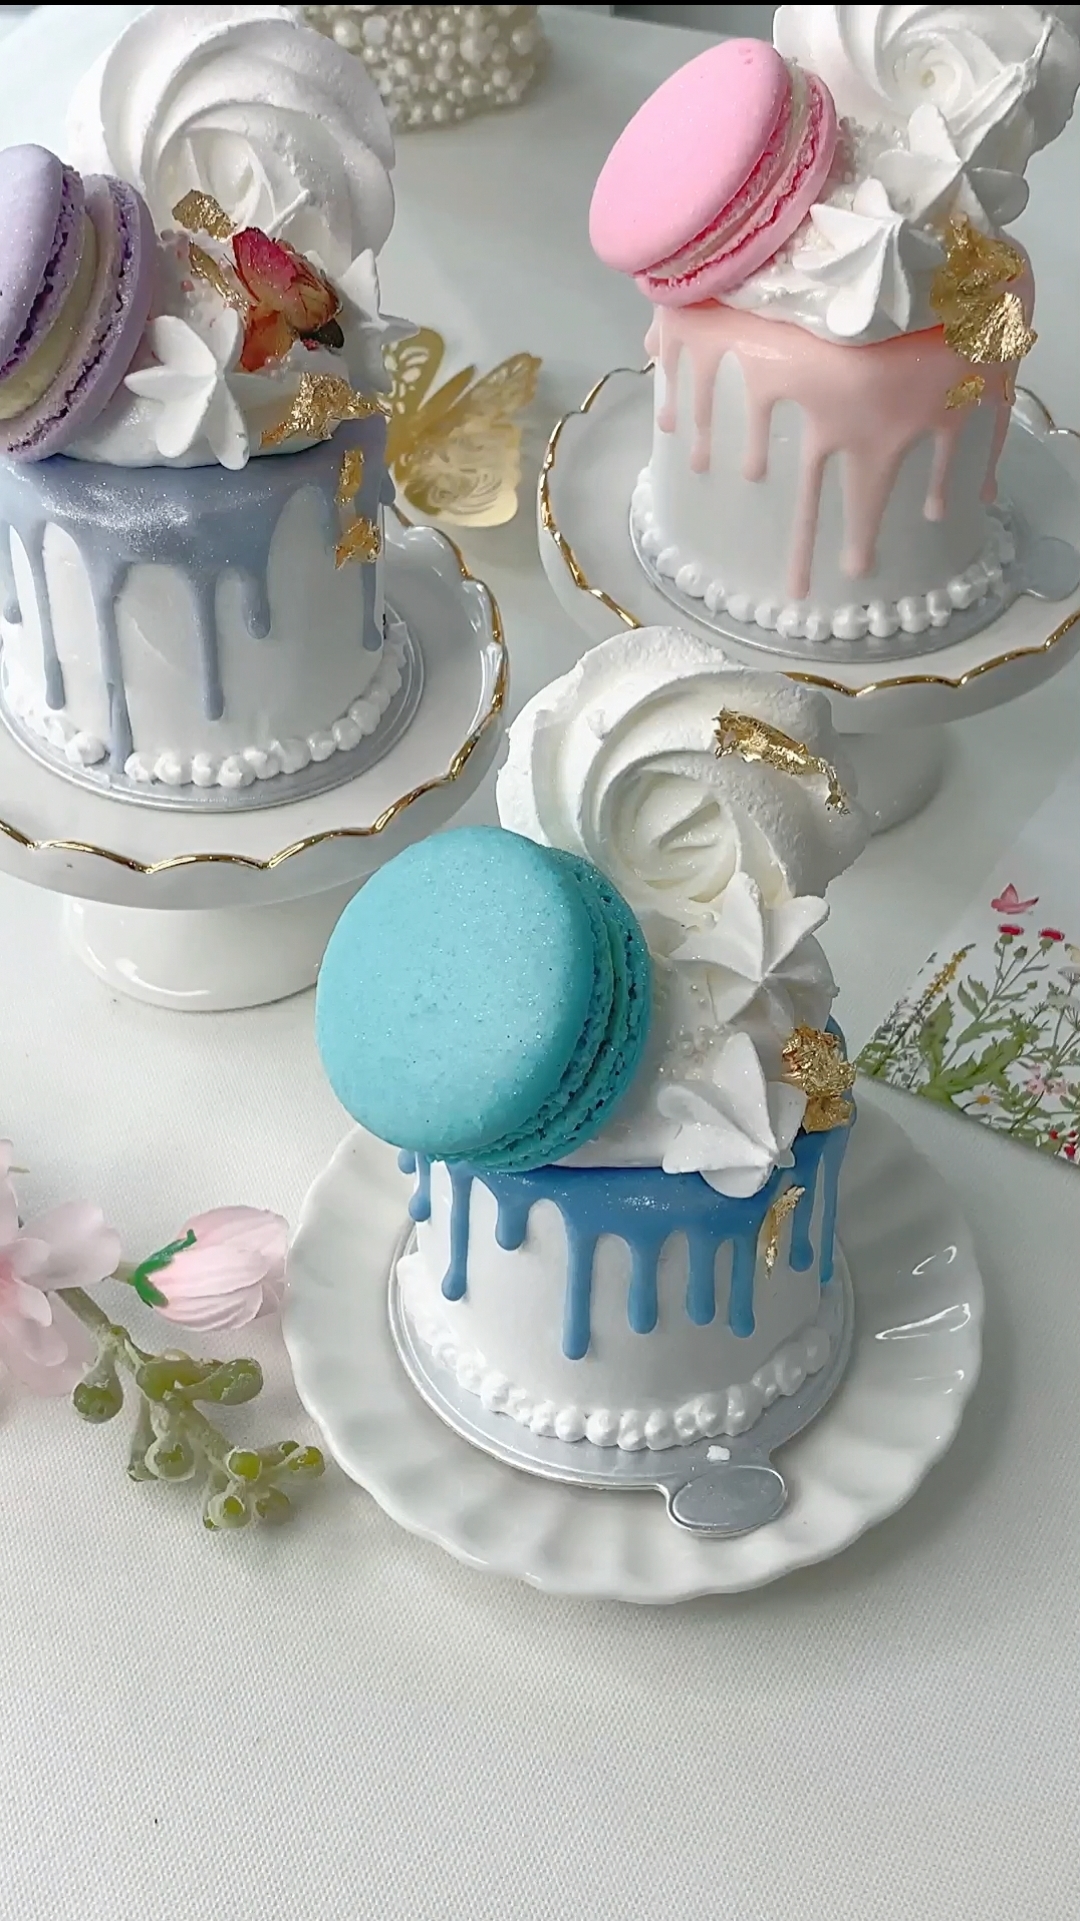 Macaron Cakes | Birthday Cake with Macarons and Flowers | Carousel Macarons